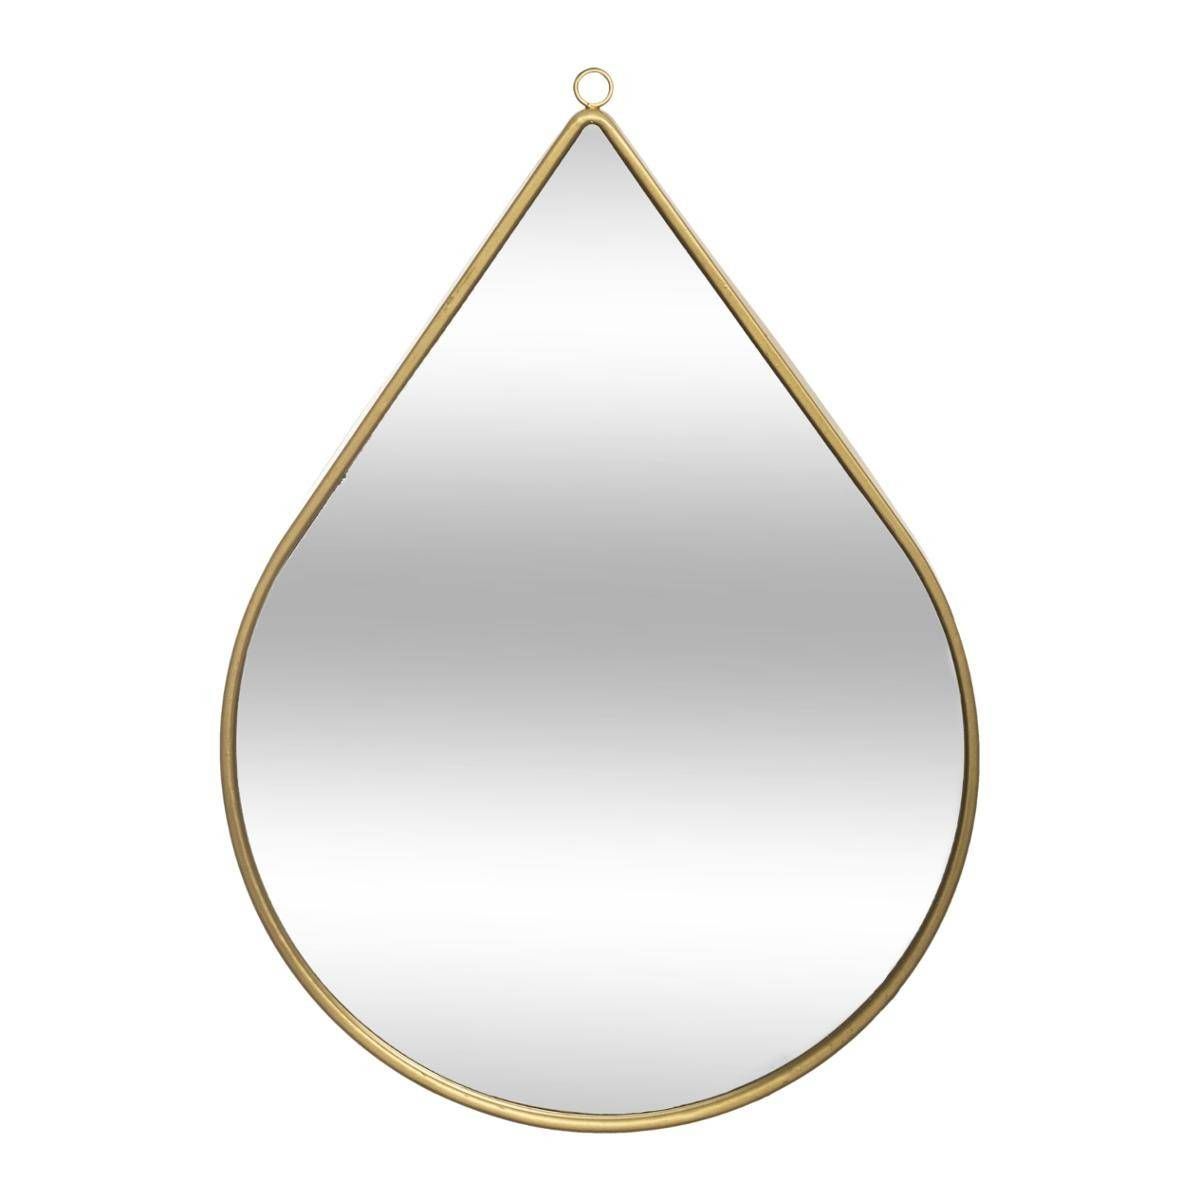 Atmosphera Dekorativní zrcadlo, tvar slzy, 21 x 29 cm, zlatá barva - EMAKO.CZ s.r.o.